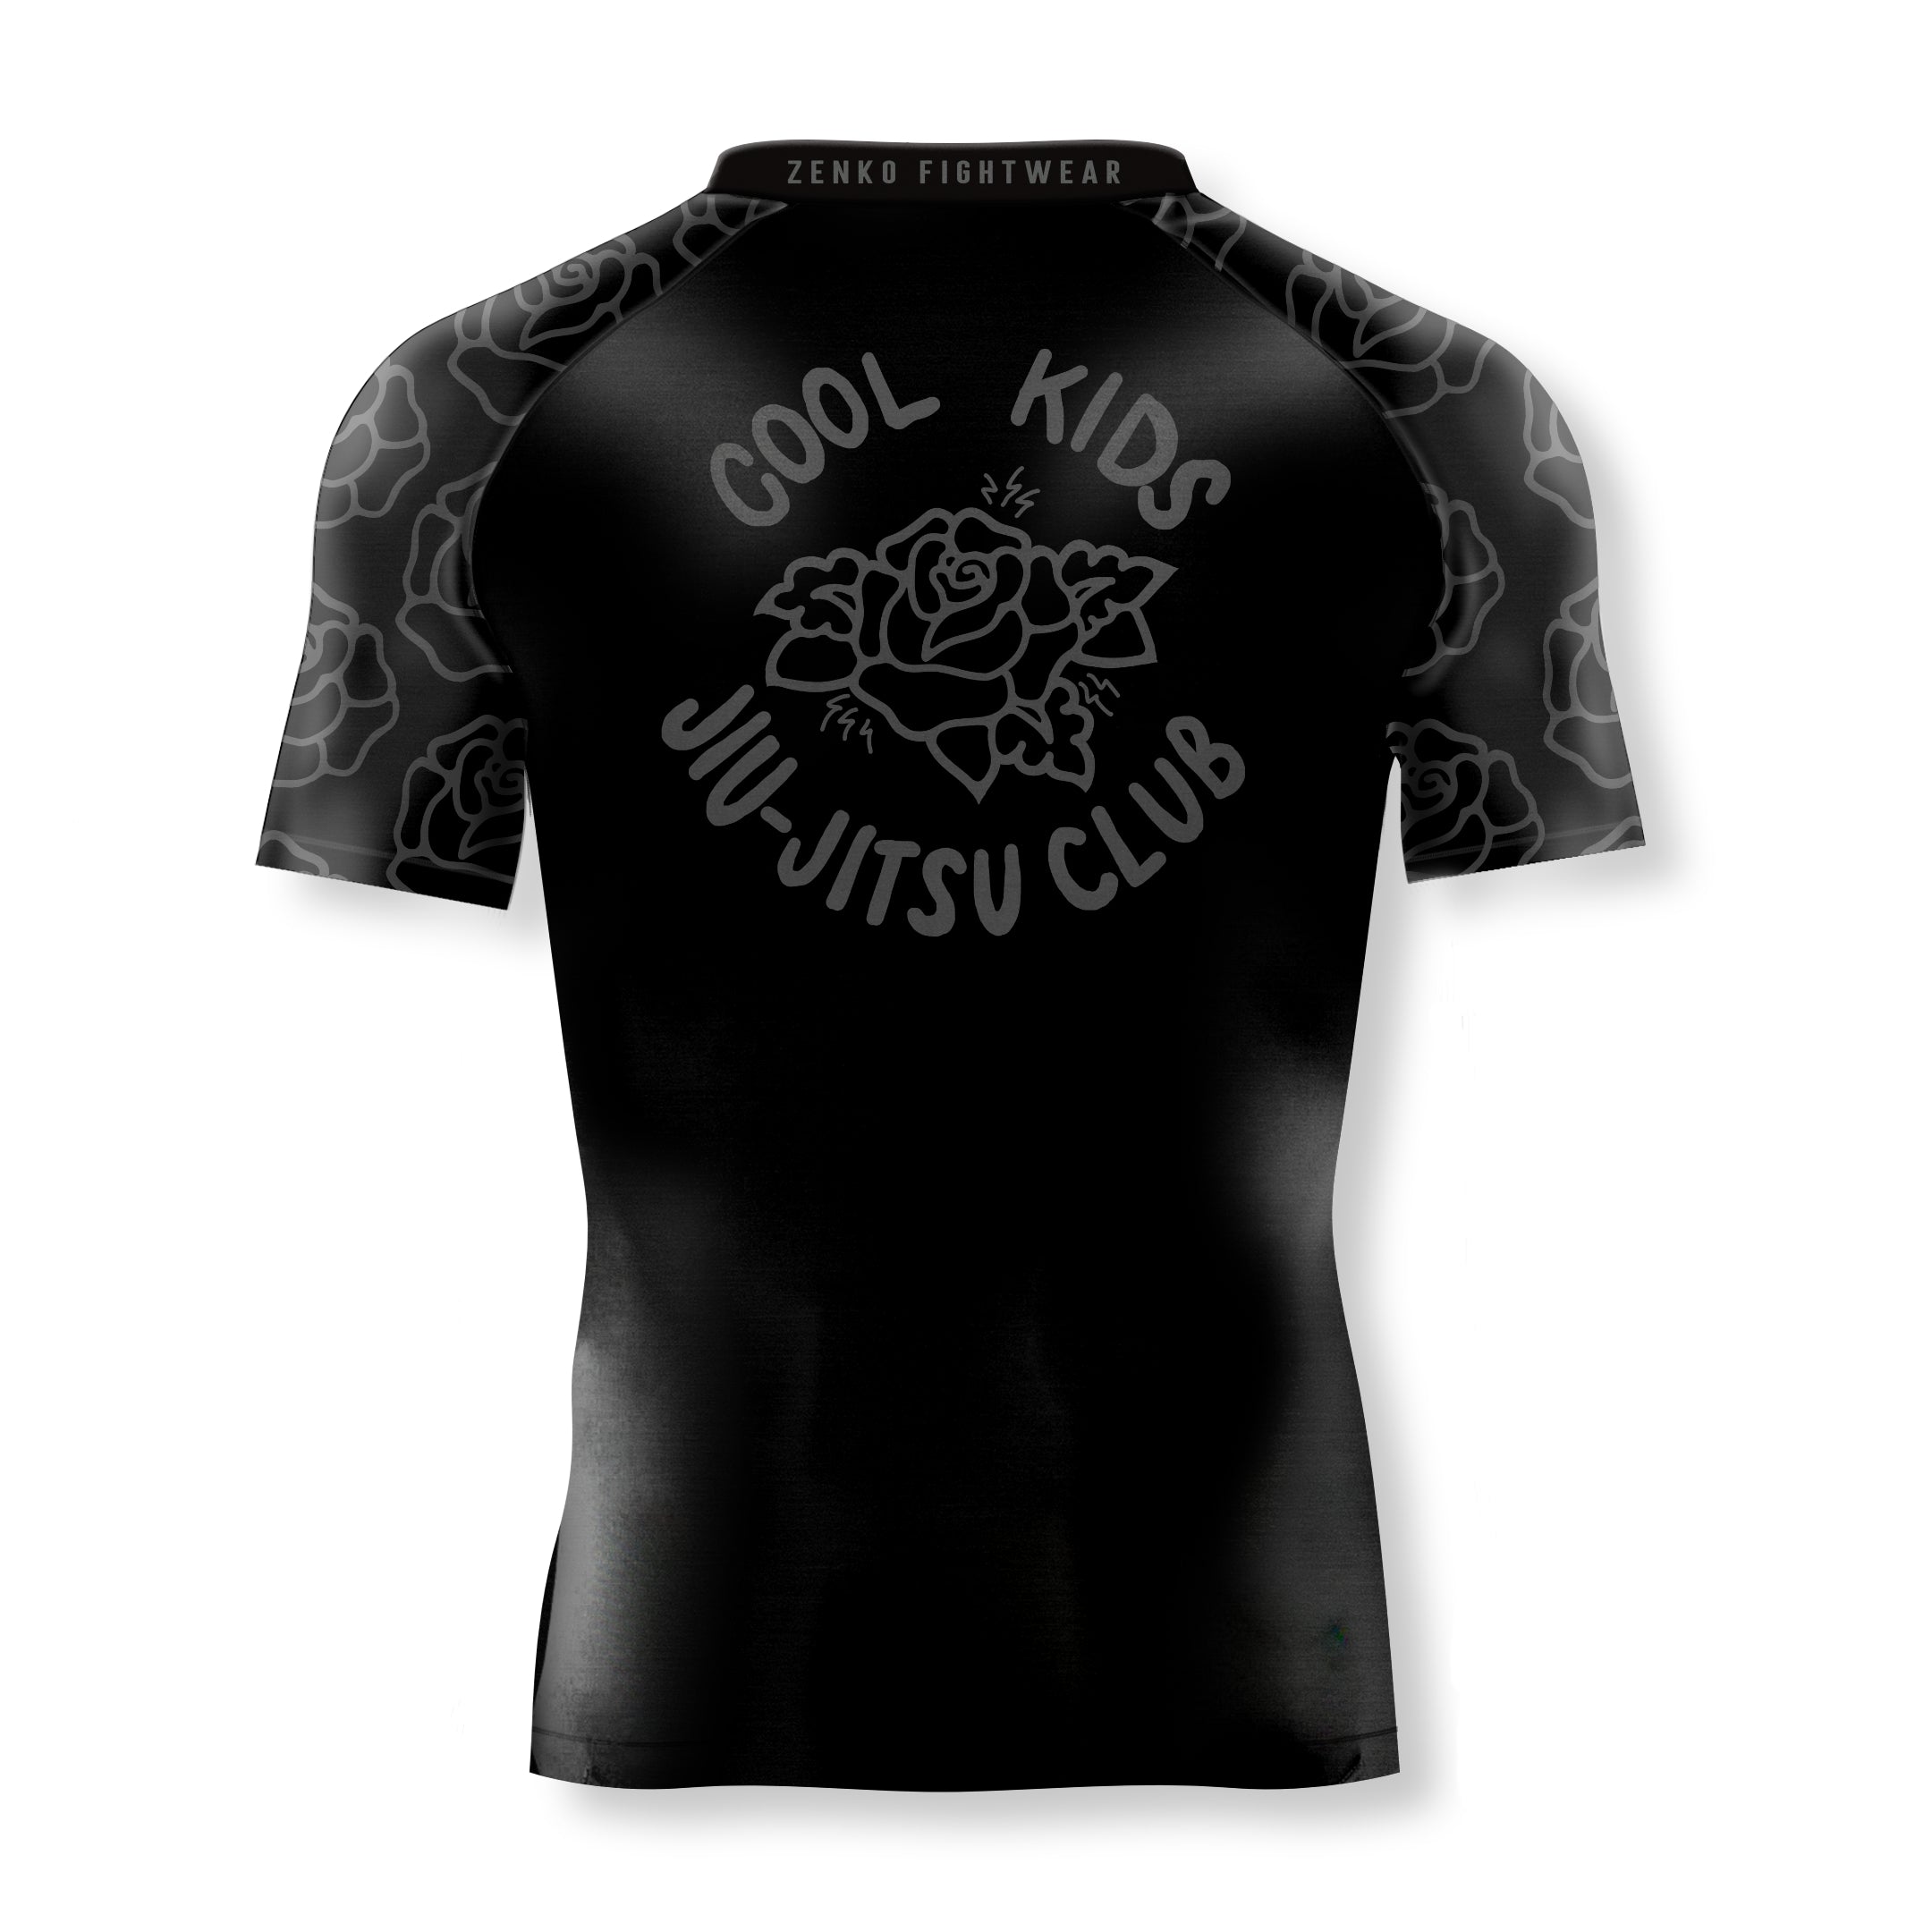 Cool Kids Club Short Sleeve Rashguard (Black)